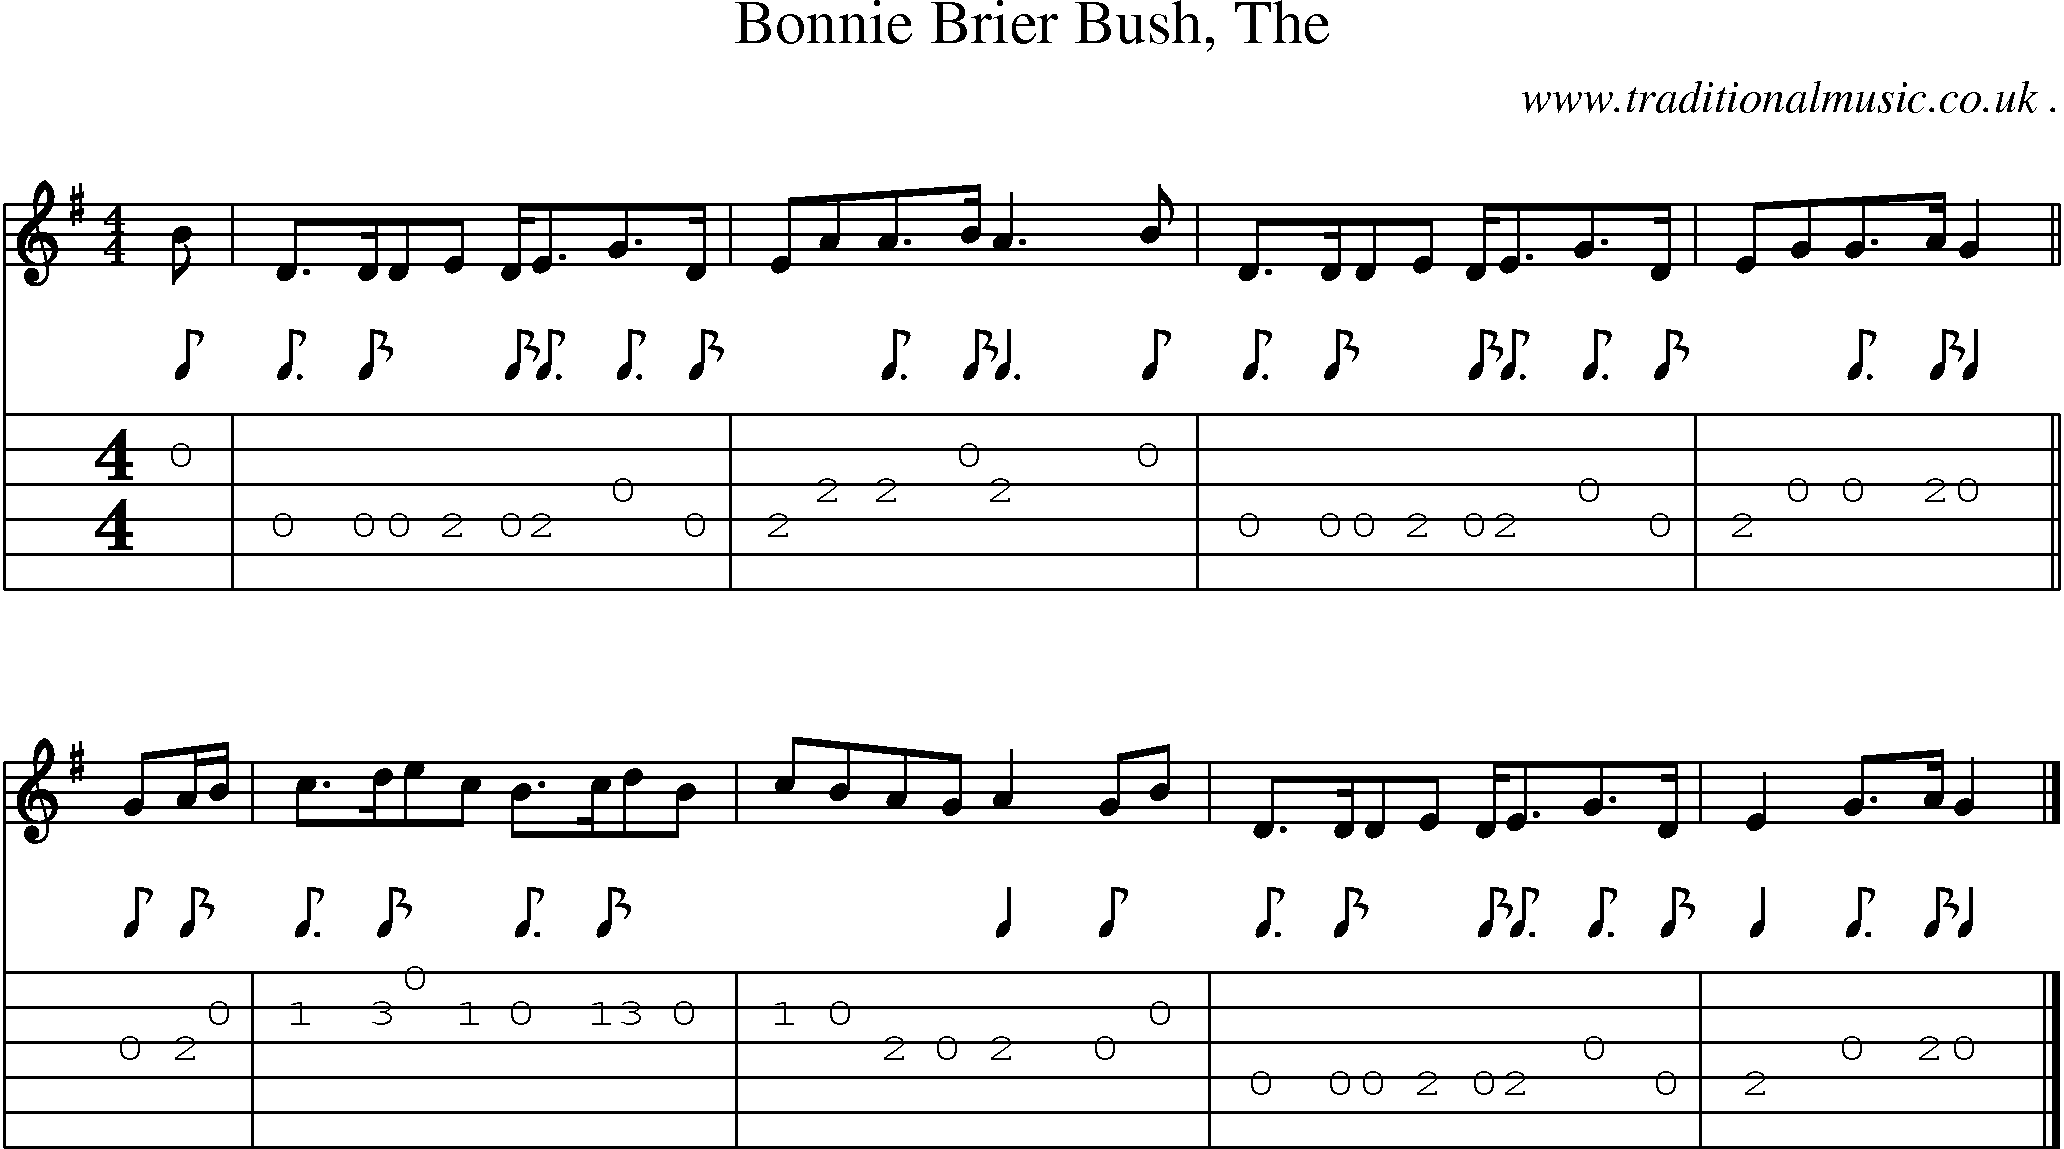 Sheet-music  score, Chords and Guitar Tabs for Bonnie Brier Bush The